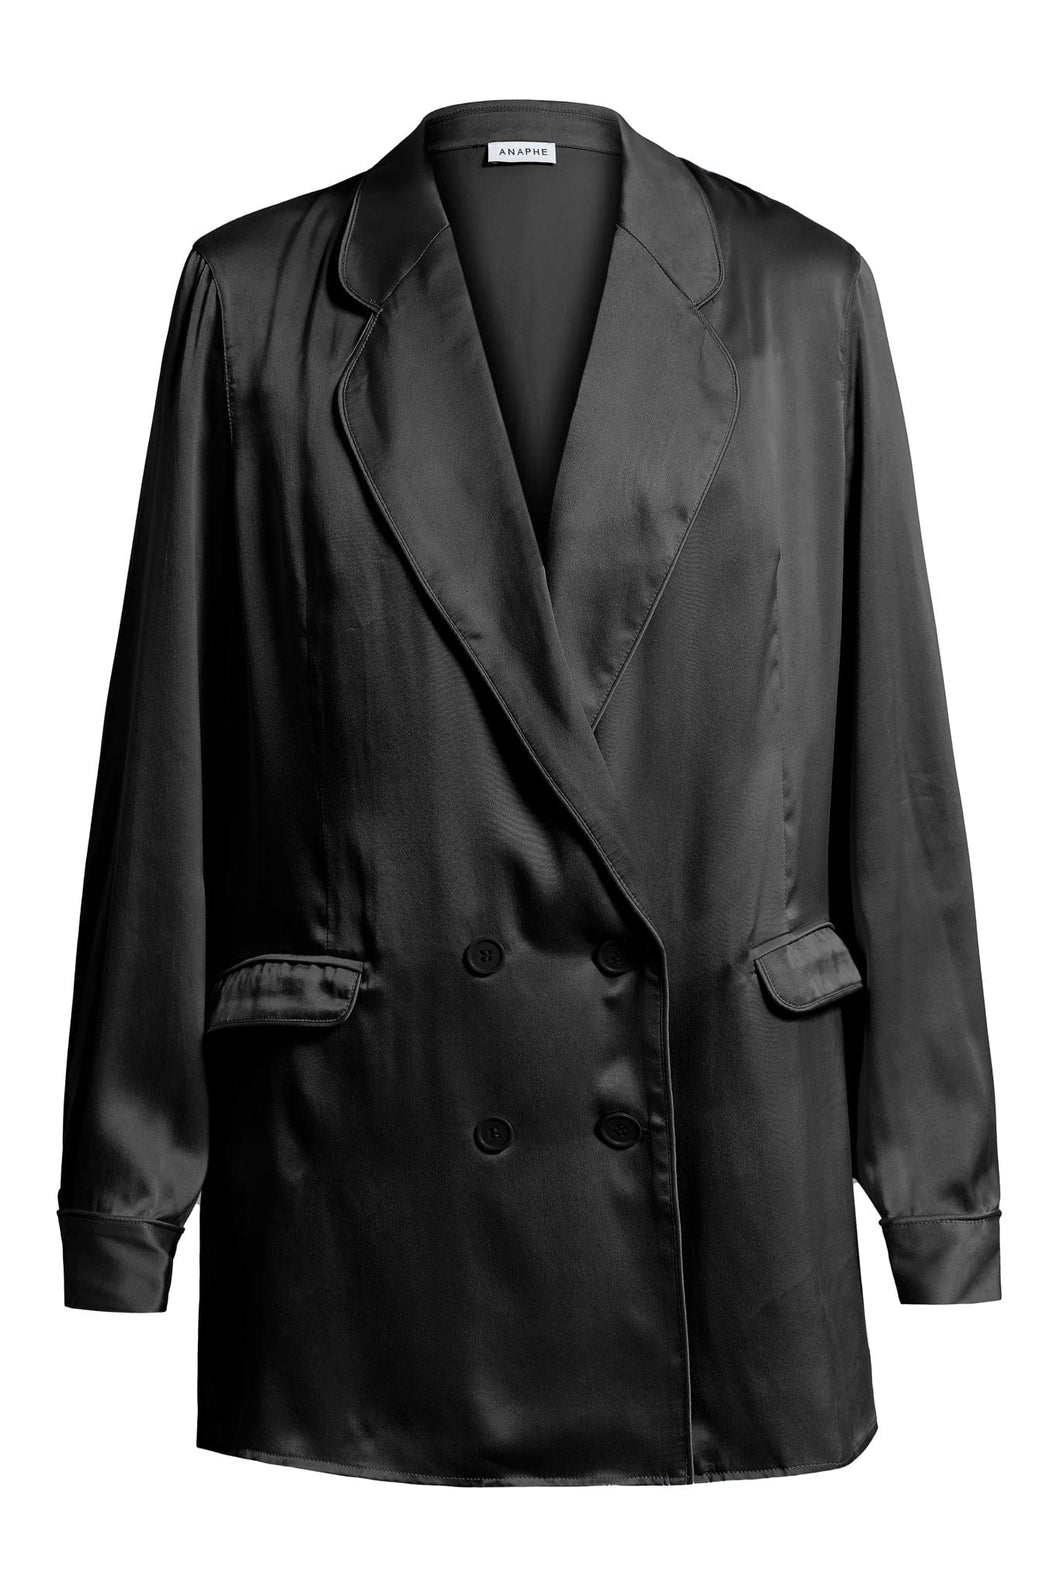 Anaphe Blazers XS/S Classic Black Ultra Light Weight Silk Blazer